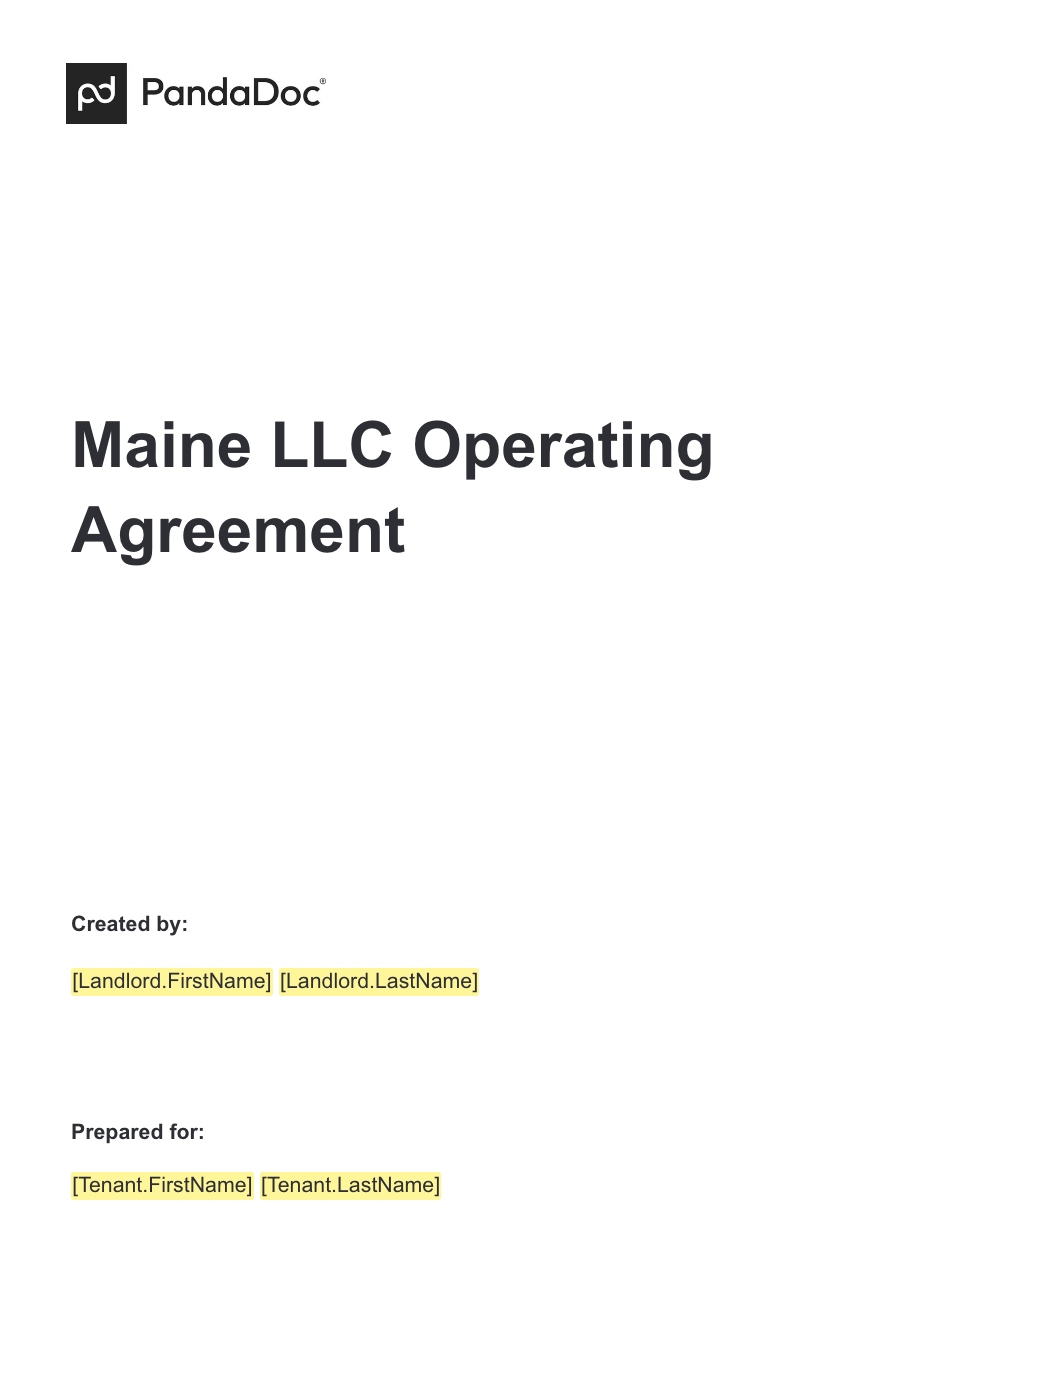 Maine LLC Operating Agreement 